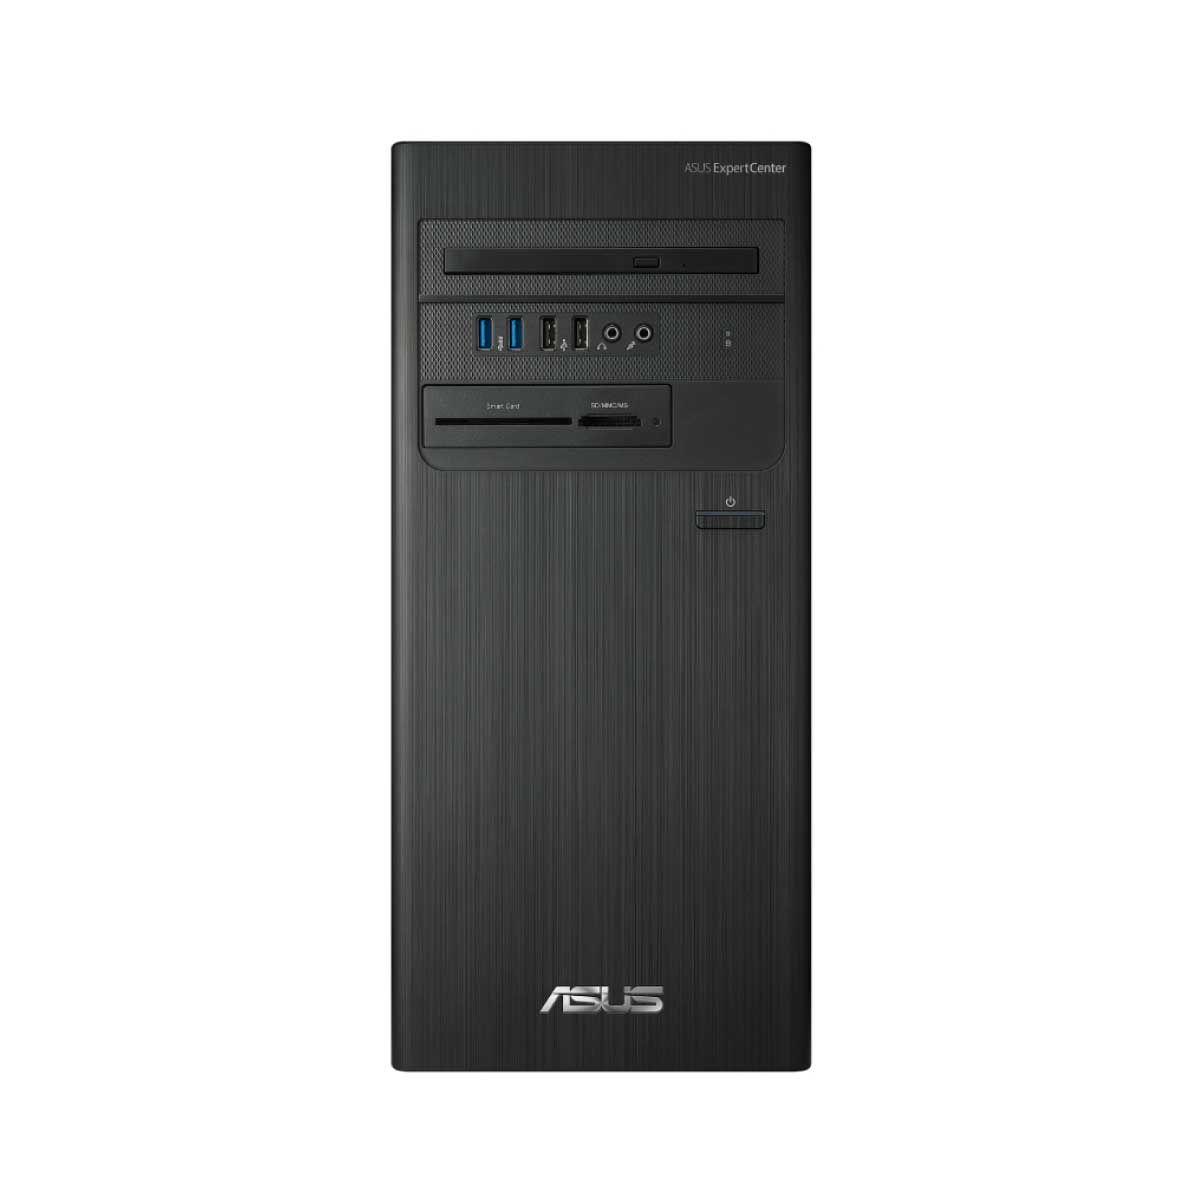 DESKTOP PC (คอมพิวเตอร์ตั้งโต๊ะ) ASUS S500TE-713700002WS